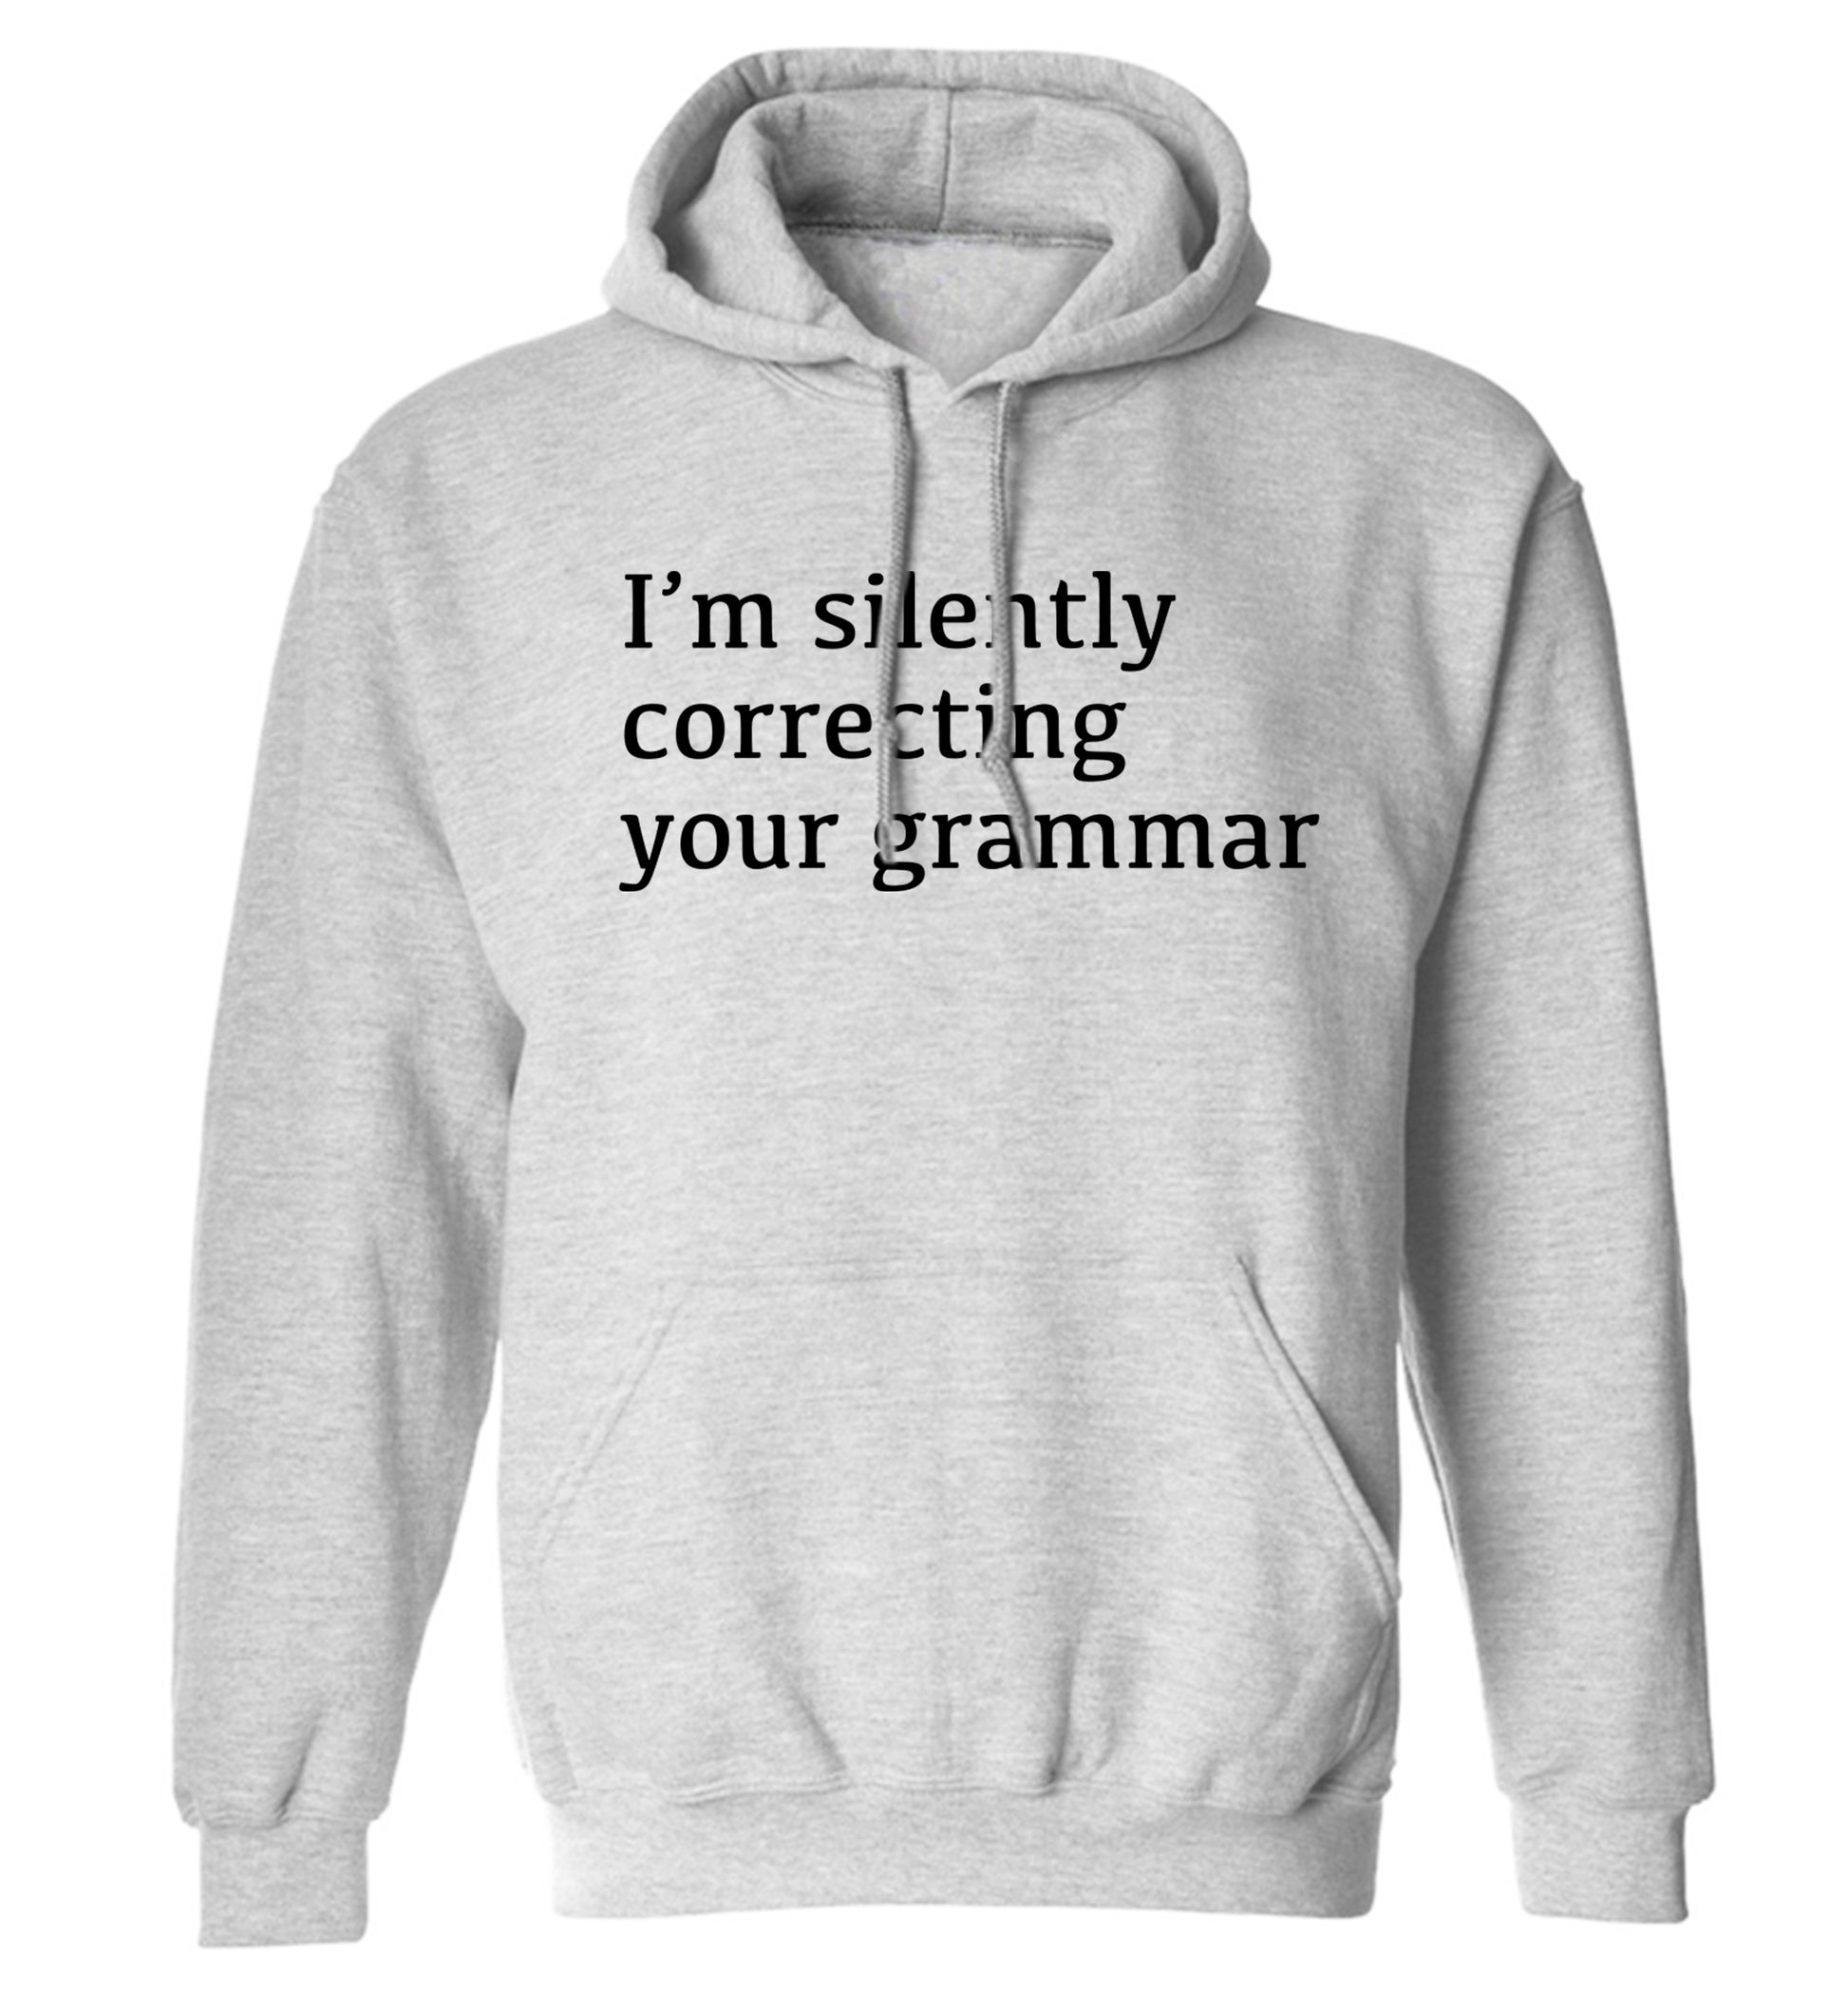 I'm silently correcting your grammar  adults unisex grey hoodie 2XL